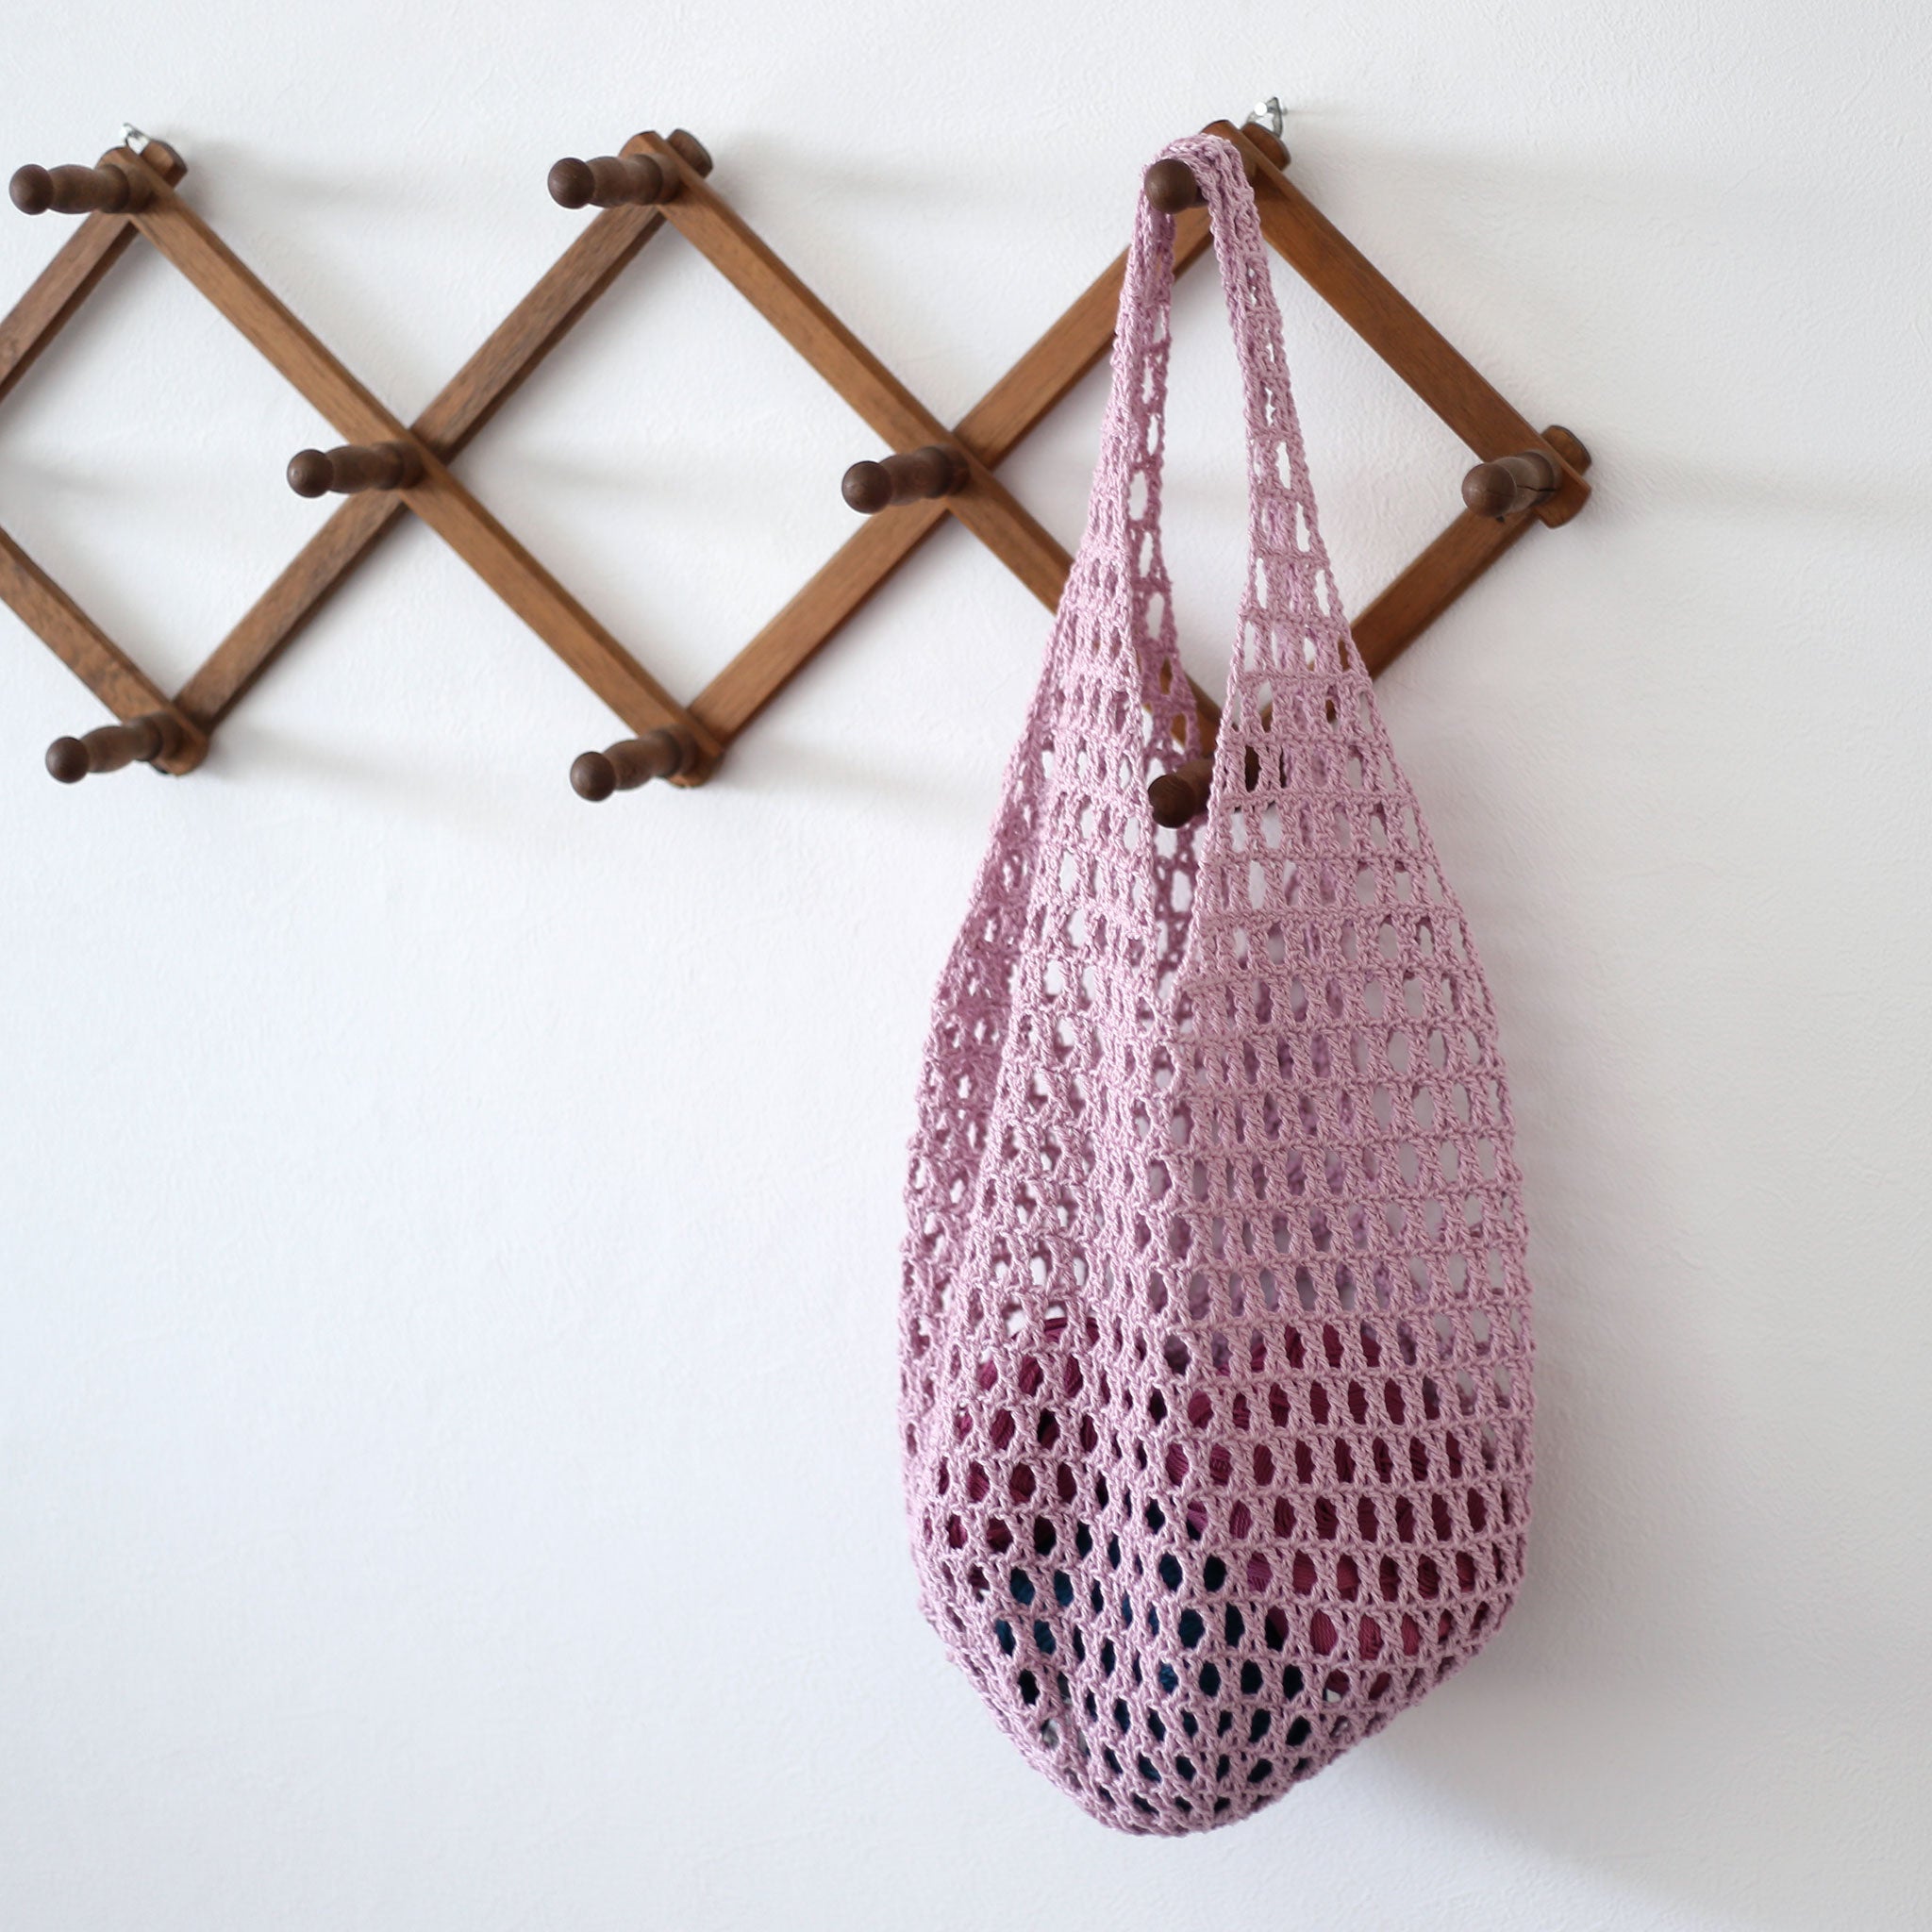 Crochet Produce Bag Pattern: A way to Reduce Waste - Winding Road Crochet